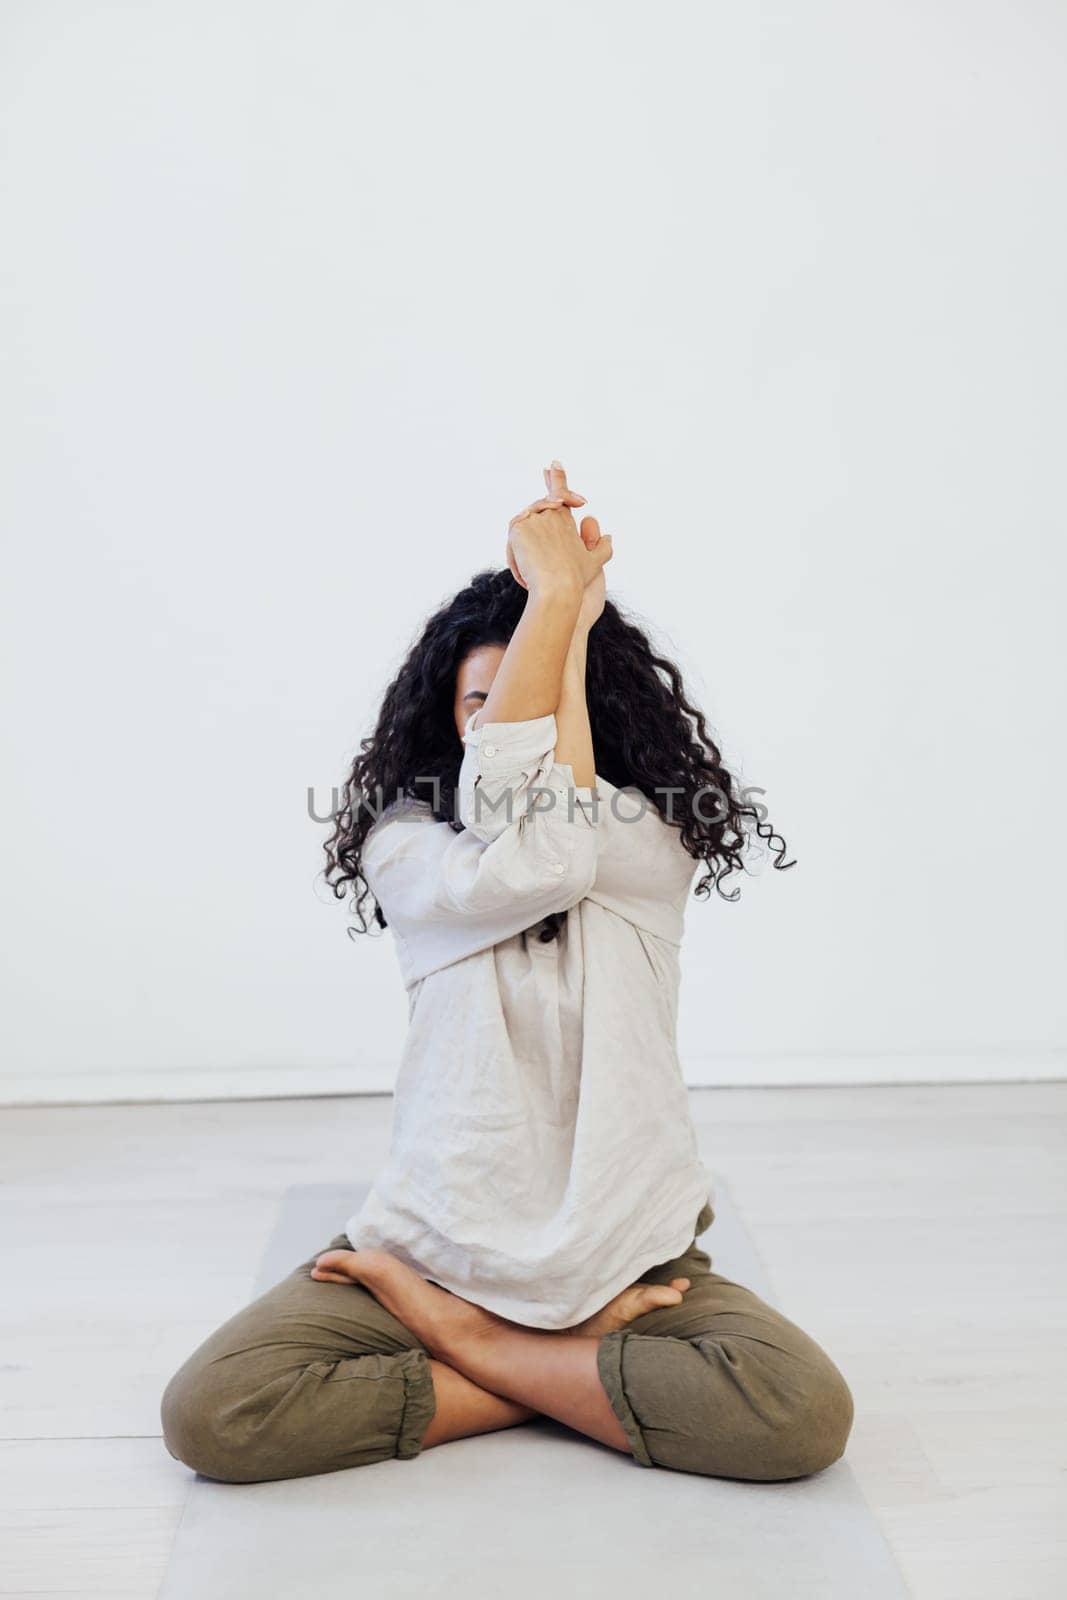 woman yoga asana gymnastics body flexibility